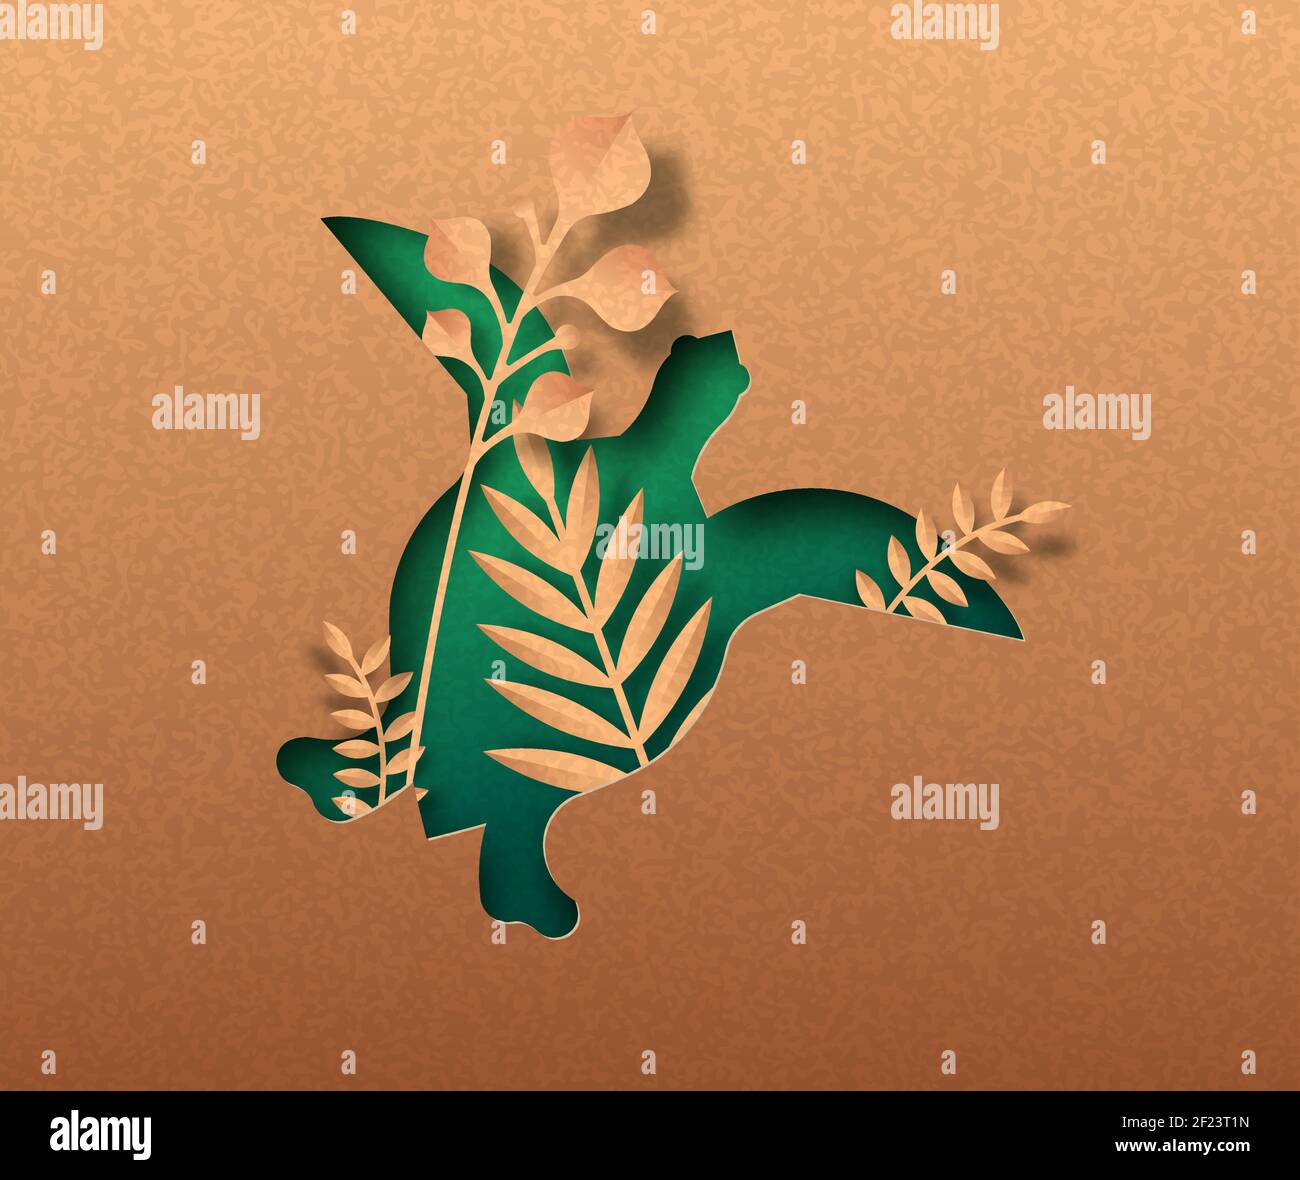 Grüne Meeresschildkröte Tier isoliert papercut Silhouette mit tropischen Pflanzen Blatt innen. Recyceltes Papier Textur Schildkröte Ausschnitt. Naturschutz, c Stock Vektor